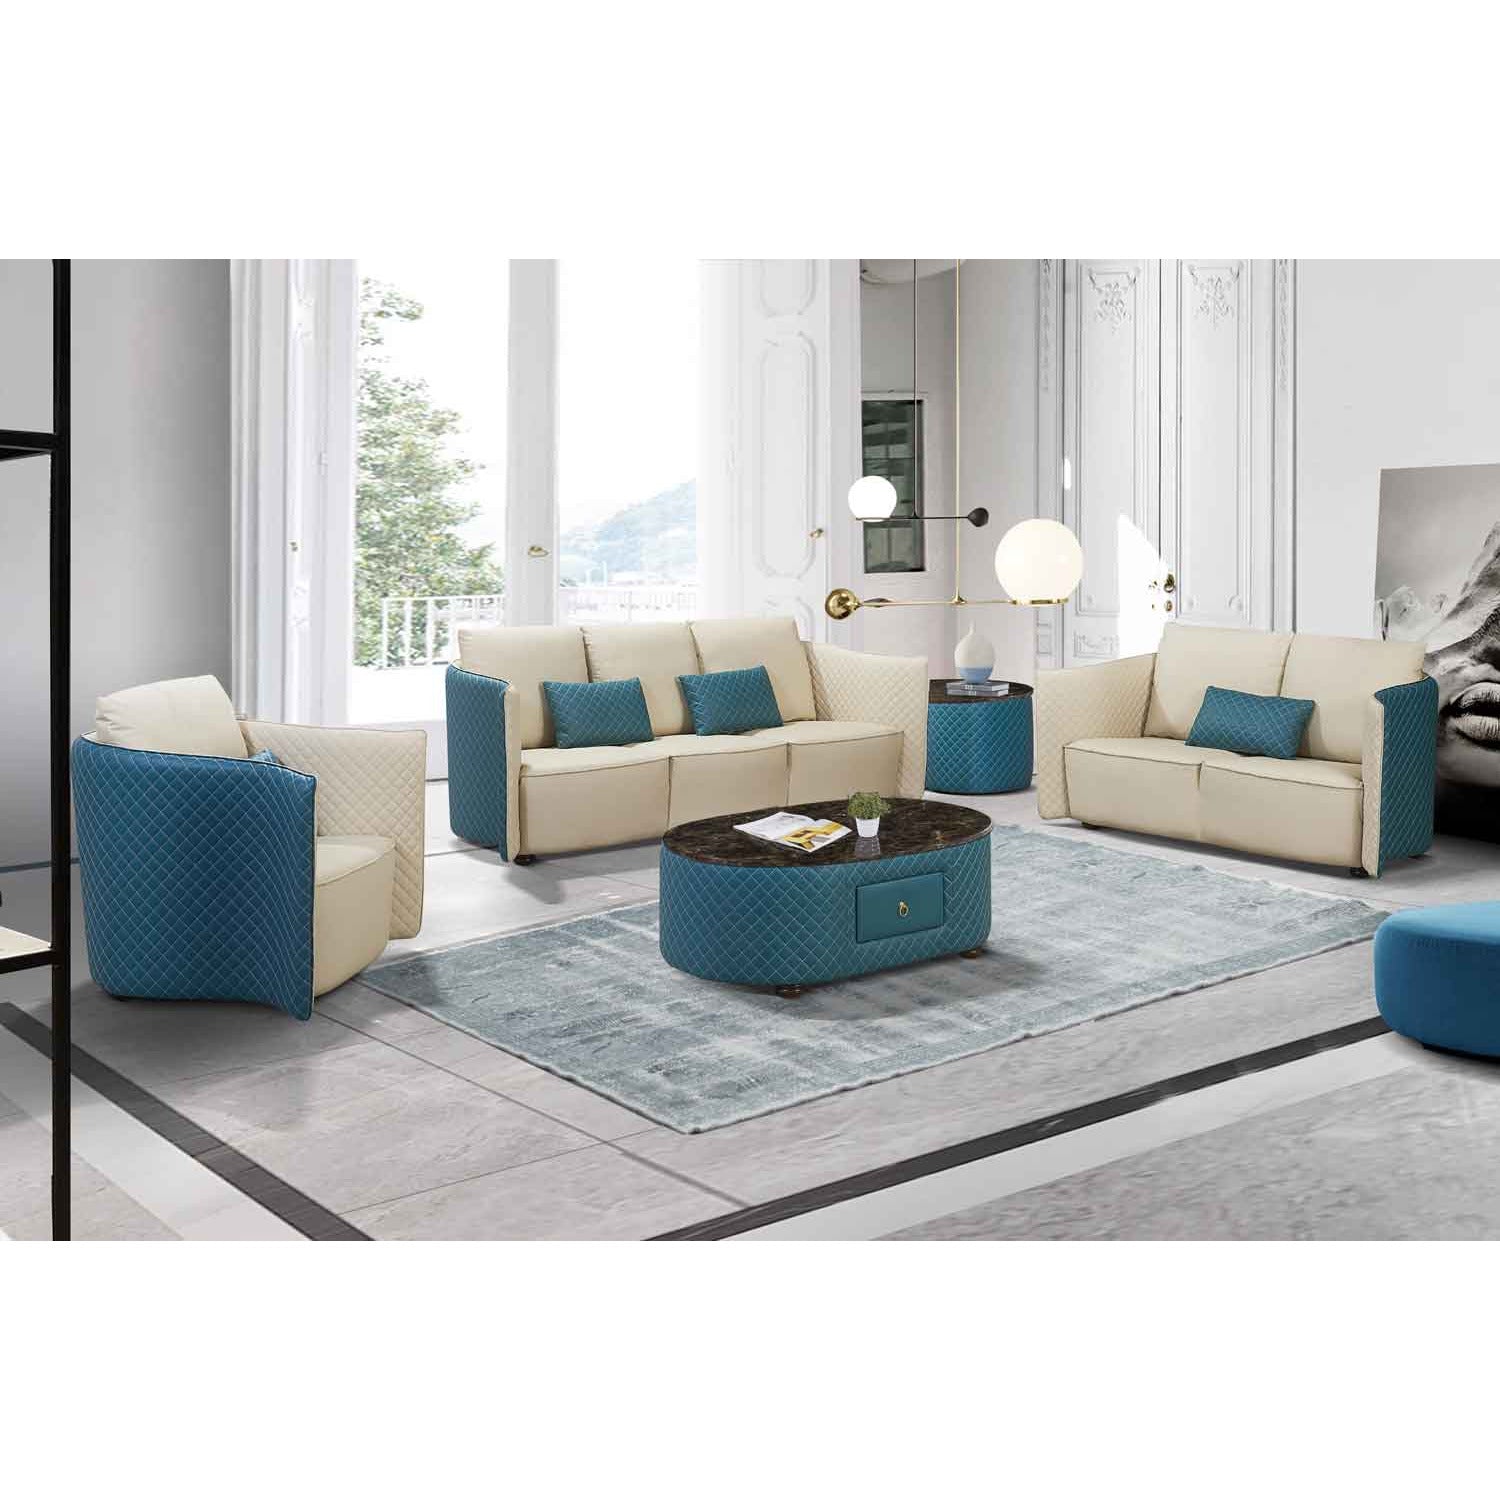 European Furniture - Makassar Sofa in Sand Beige & Blue - 52554-S - New Star Living